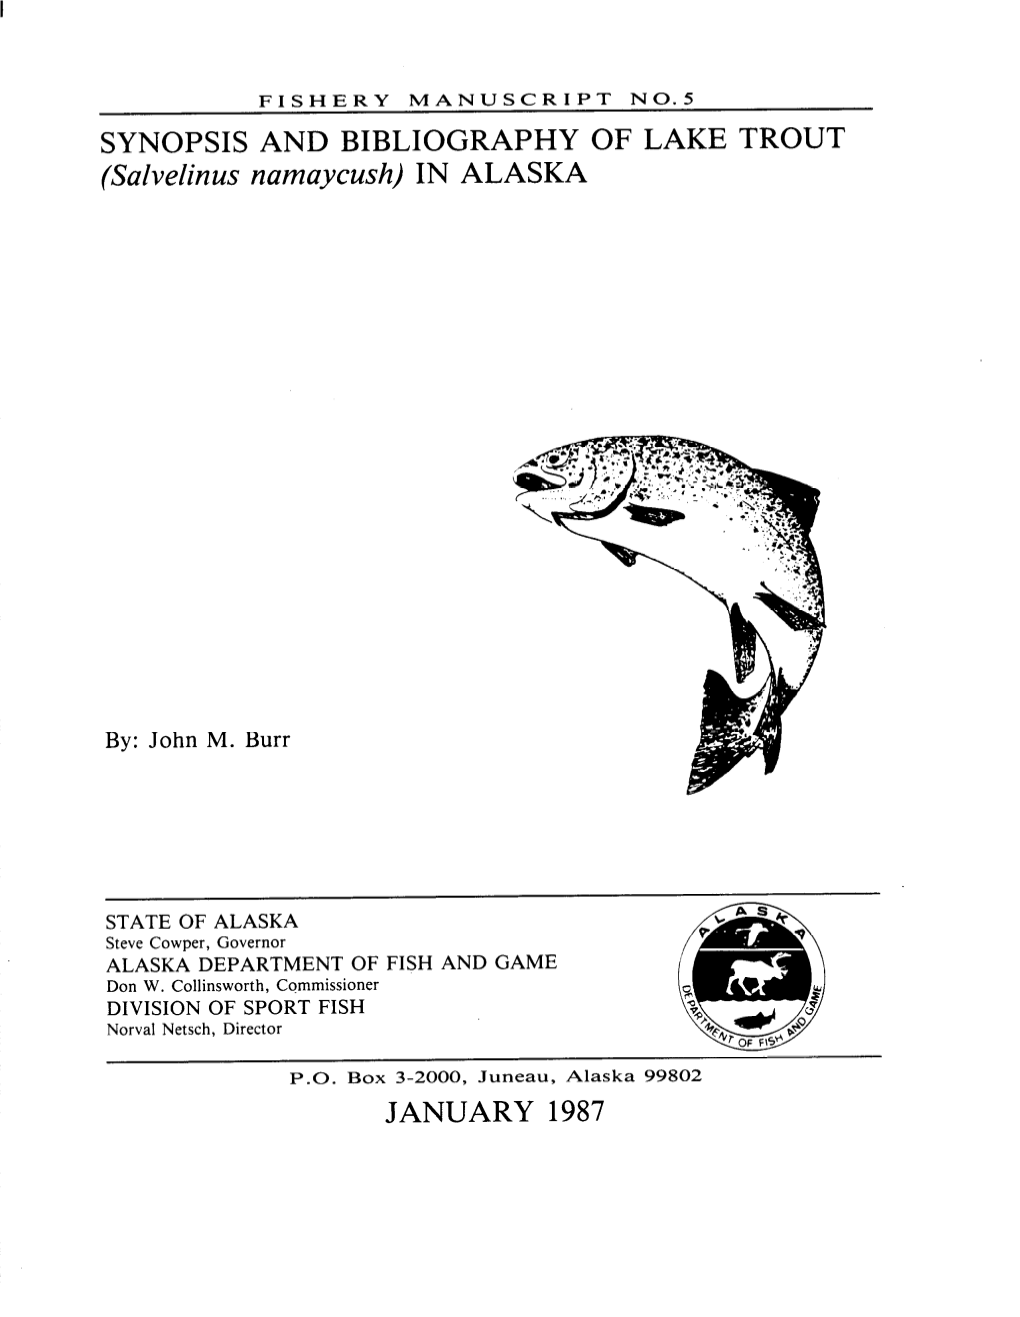 SYNOPSIS and BIBLIOGRAPHY of LAKE TROUT (Salvelinus Namaycush) in ALASKA’